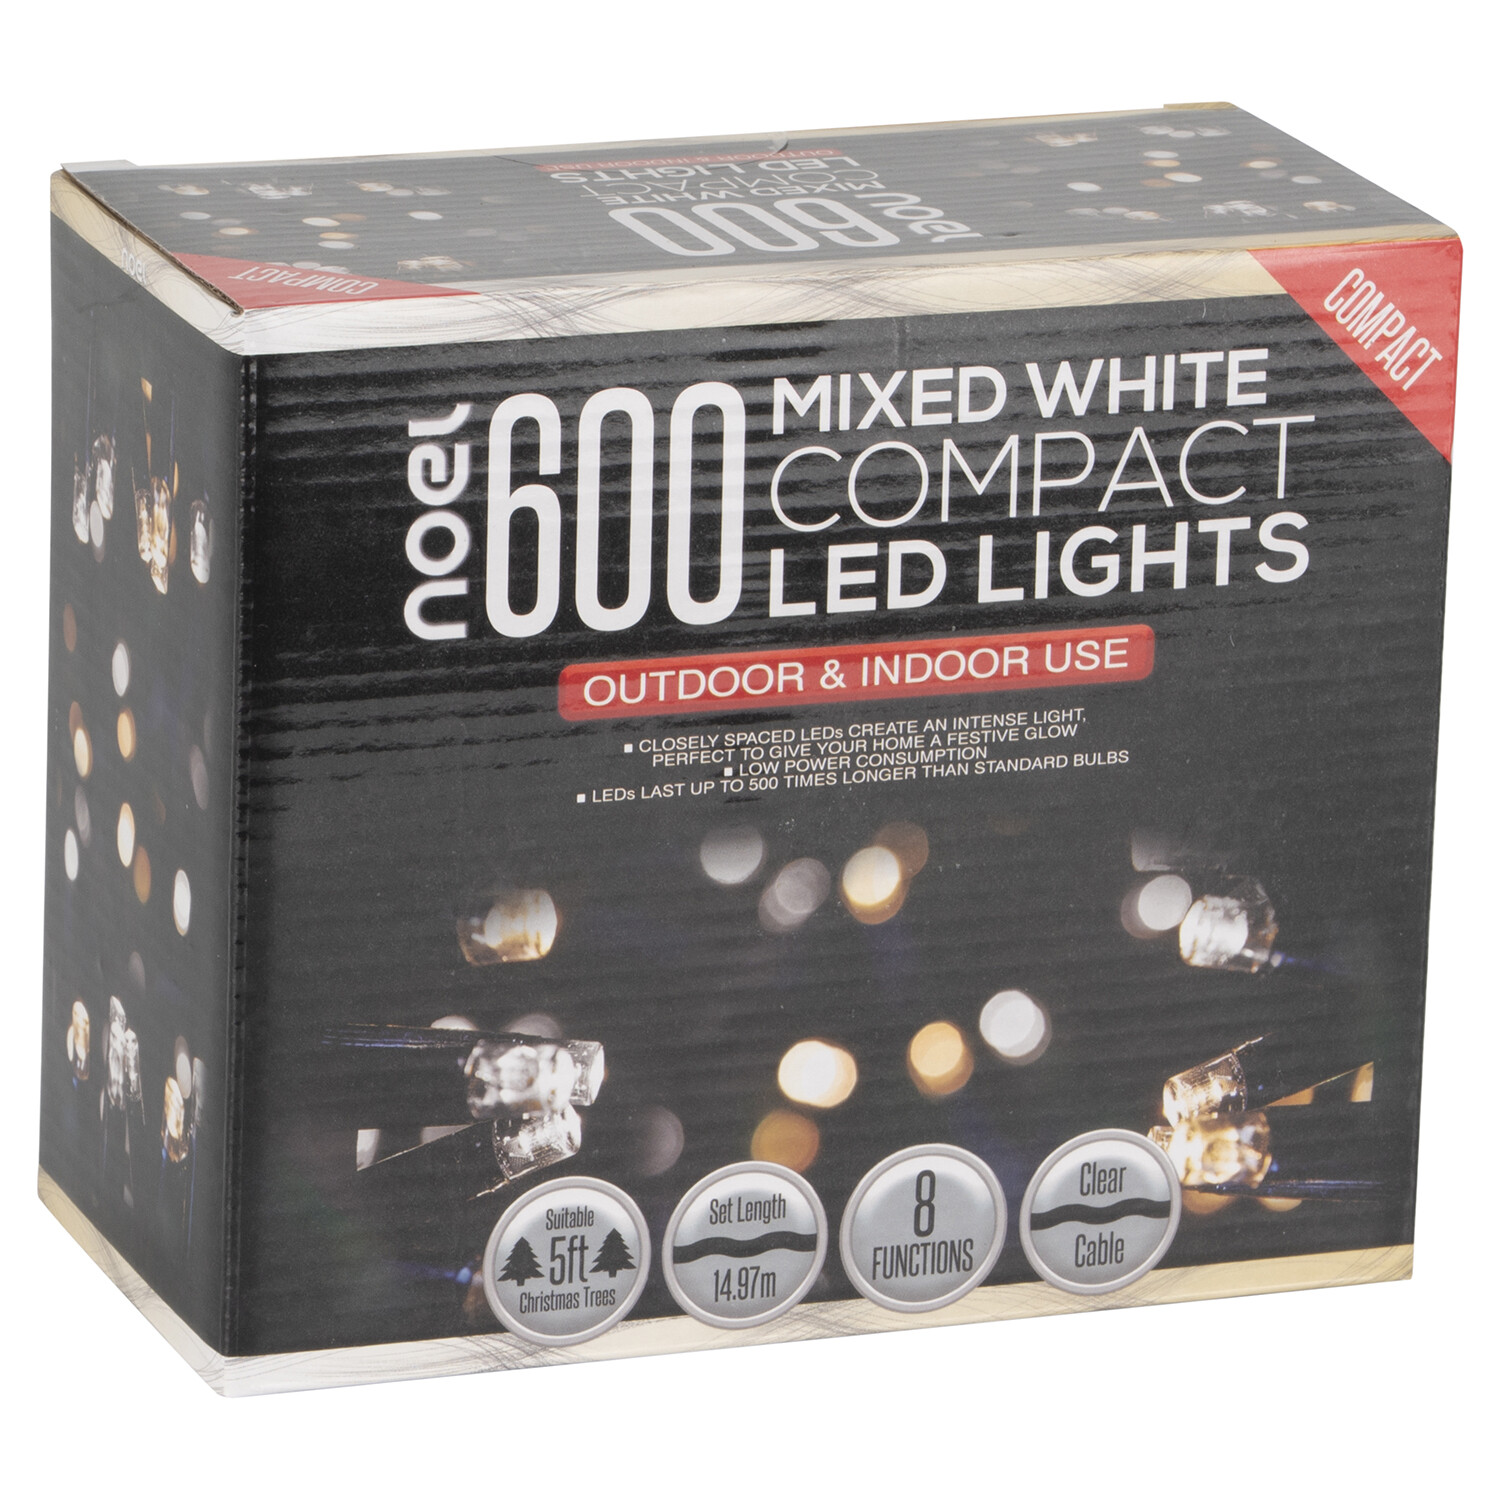 Compact LED Lights - Mixed White / 600 Image